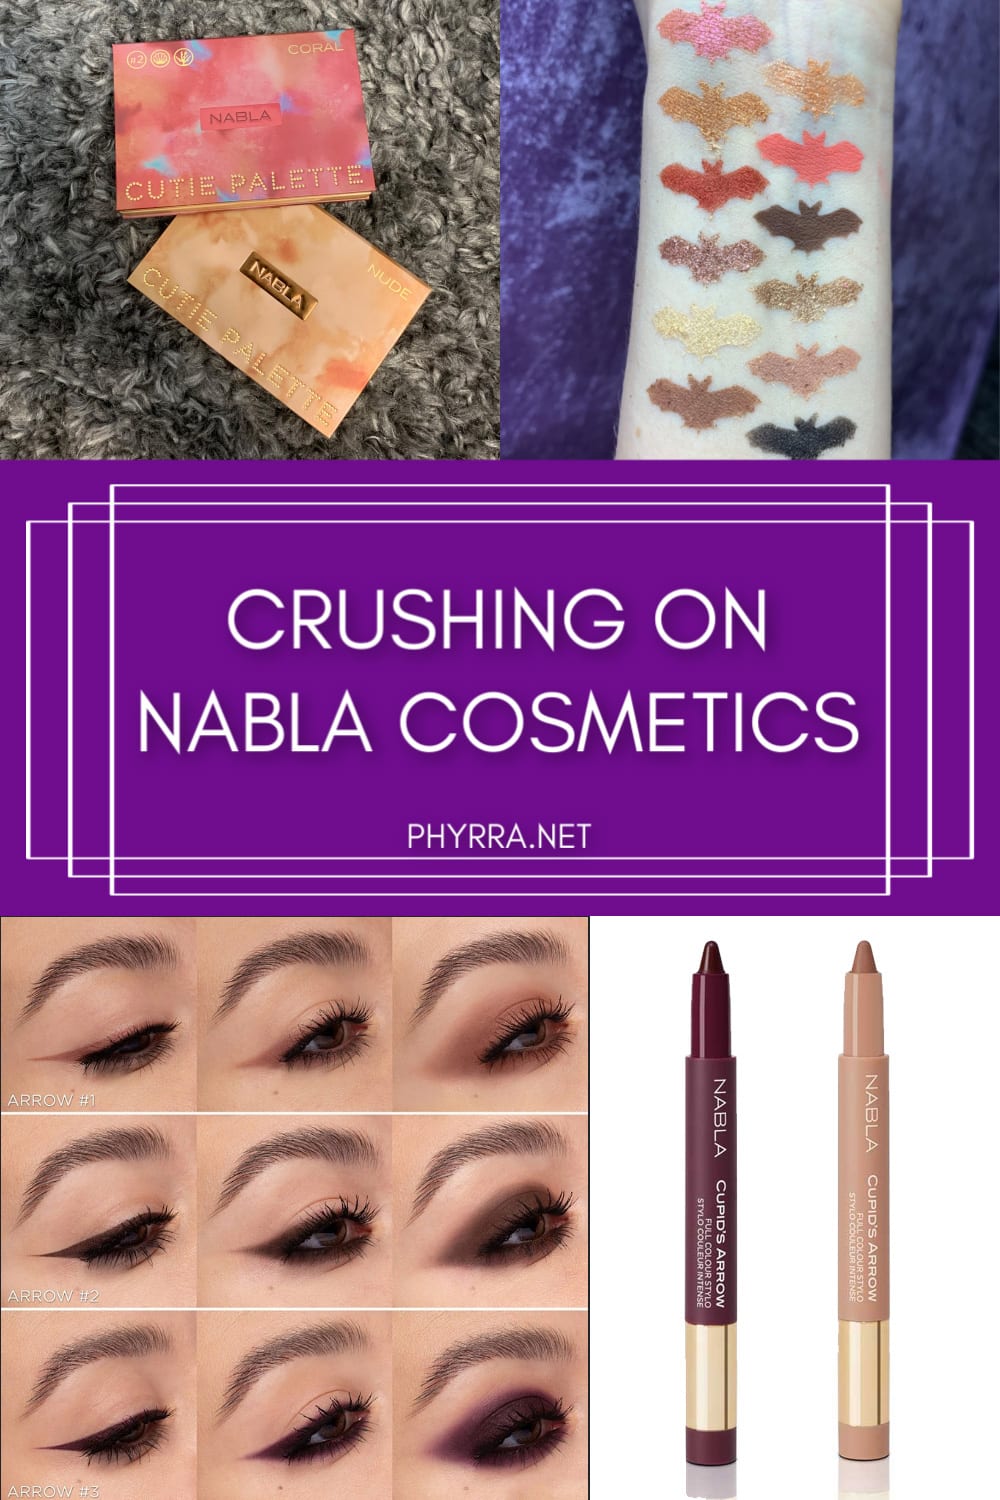 Crushing on NABLA Cosmetics